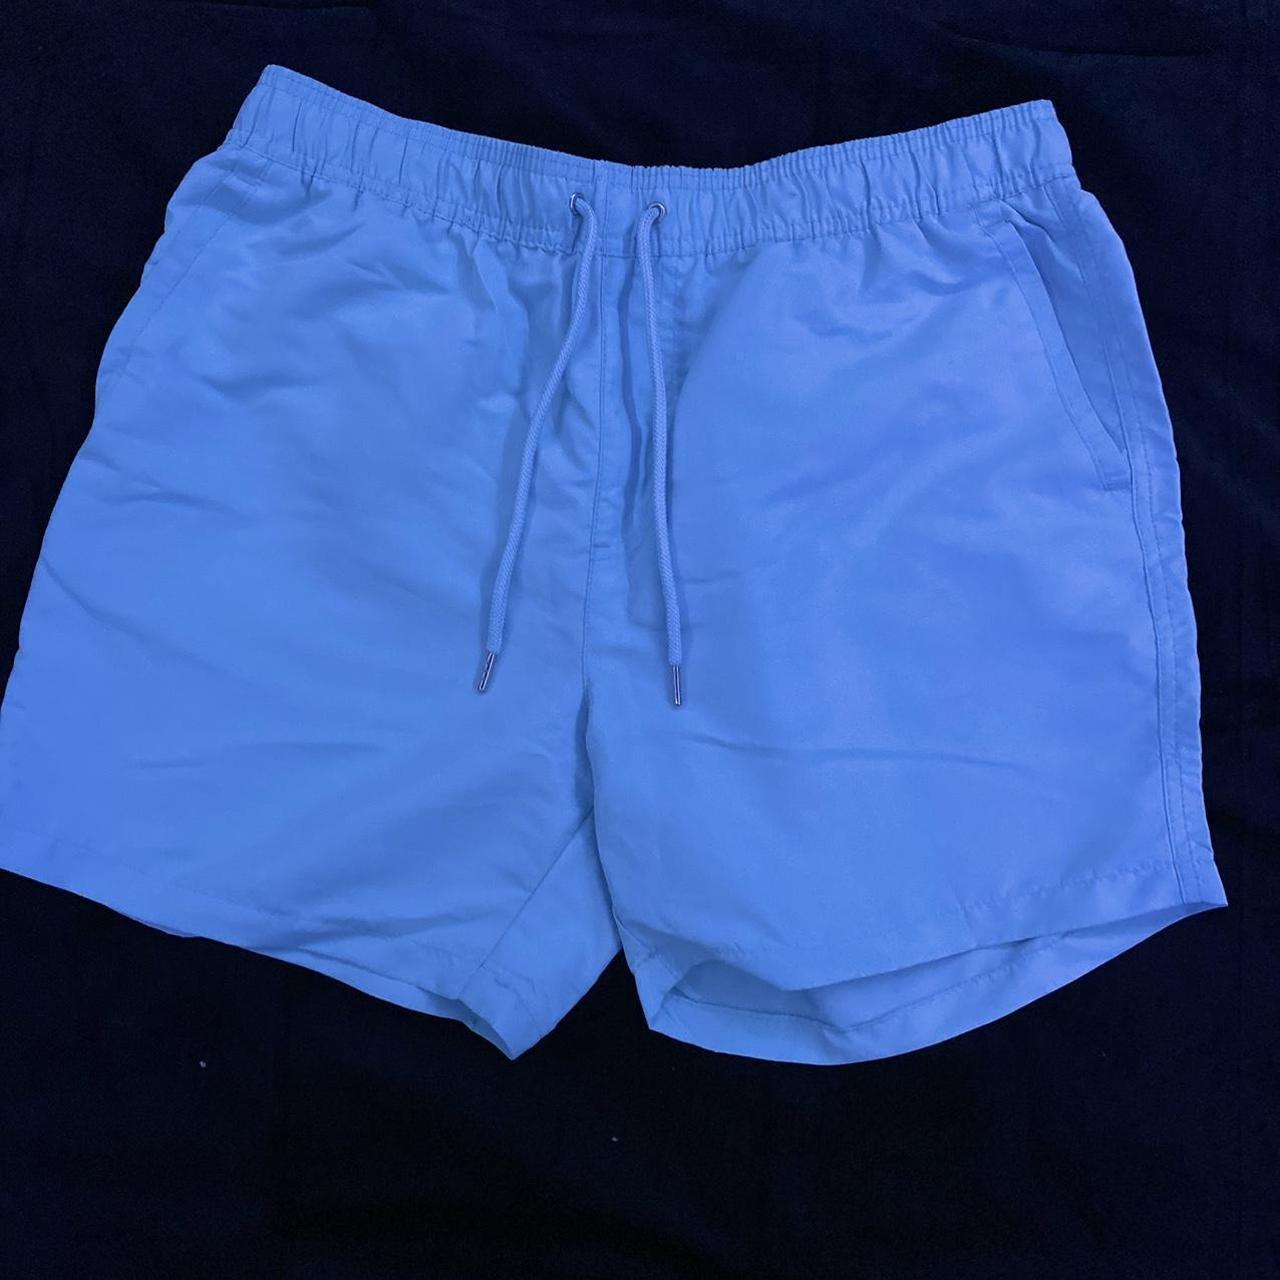 Forever 21 Men's Blue Shorts | Depop